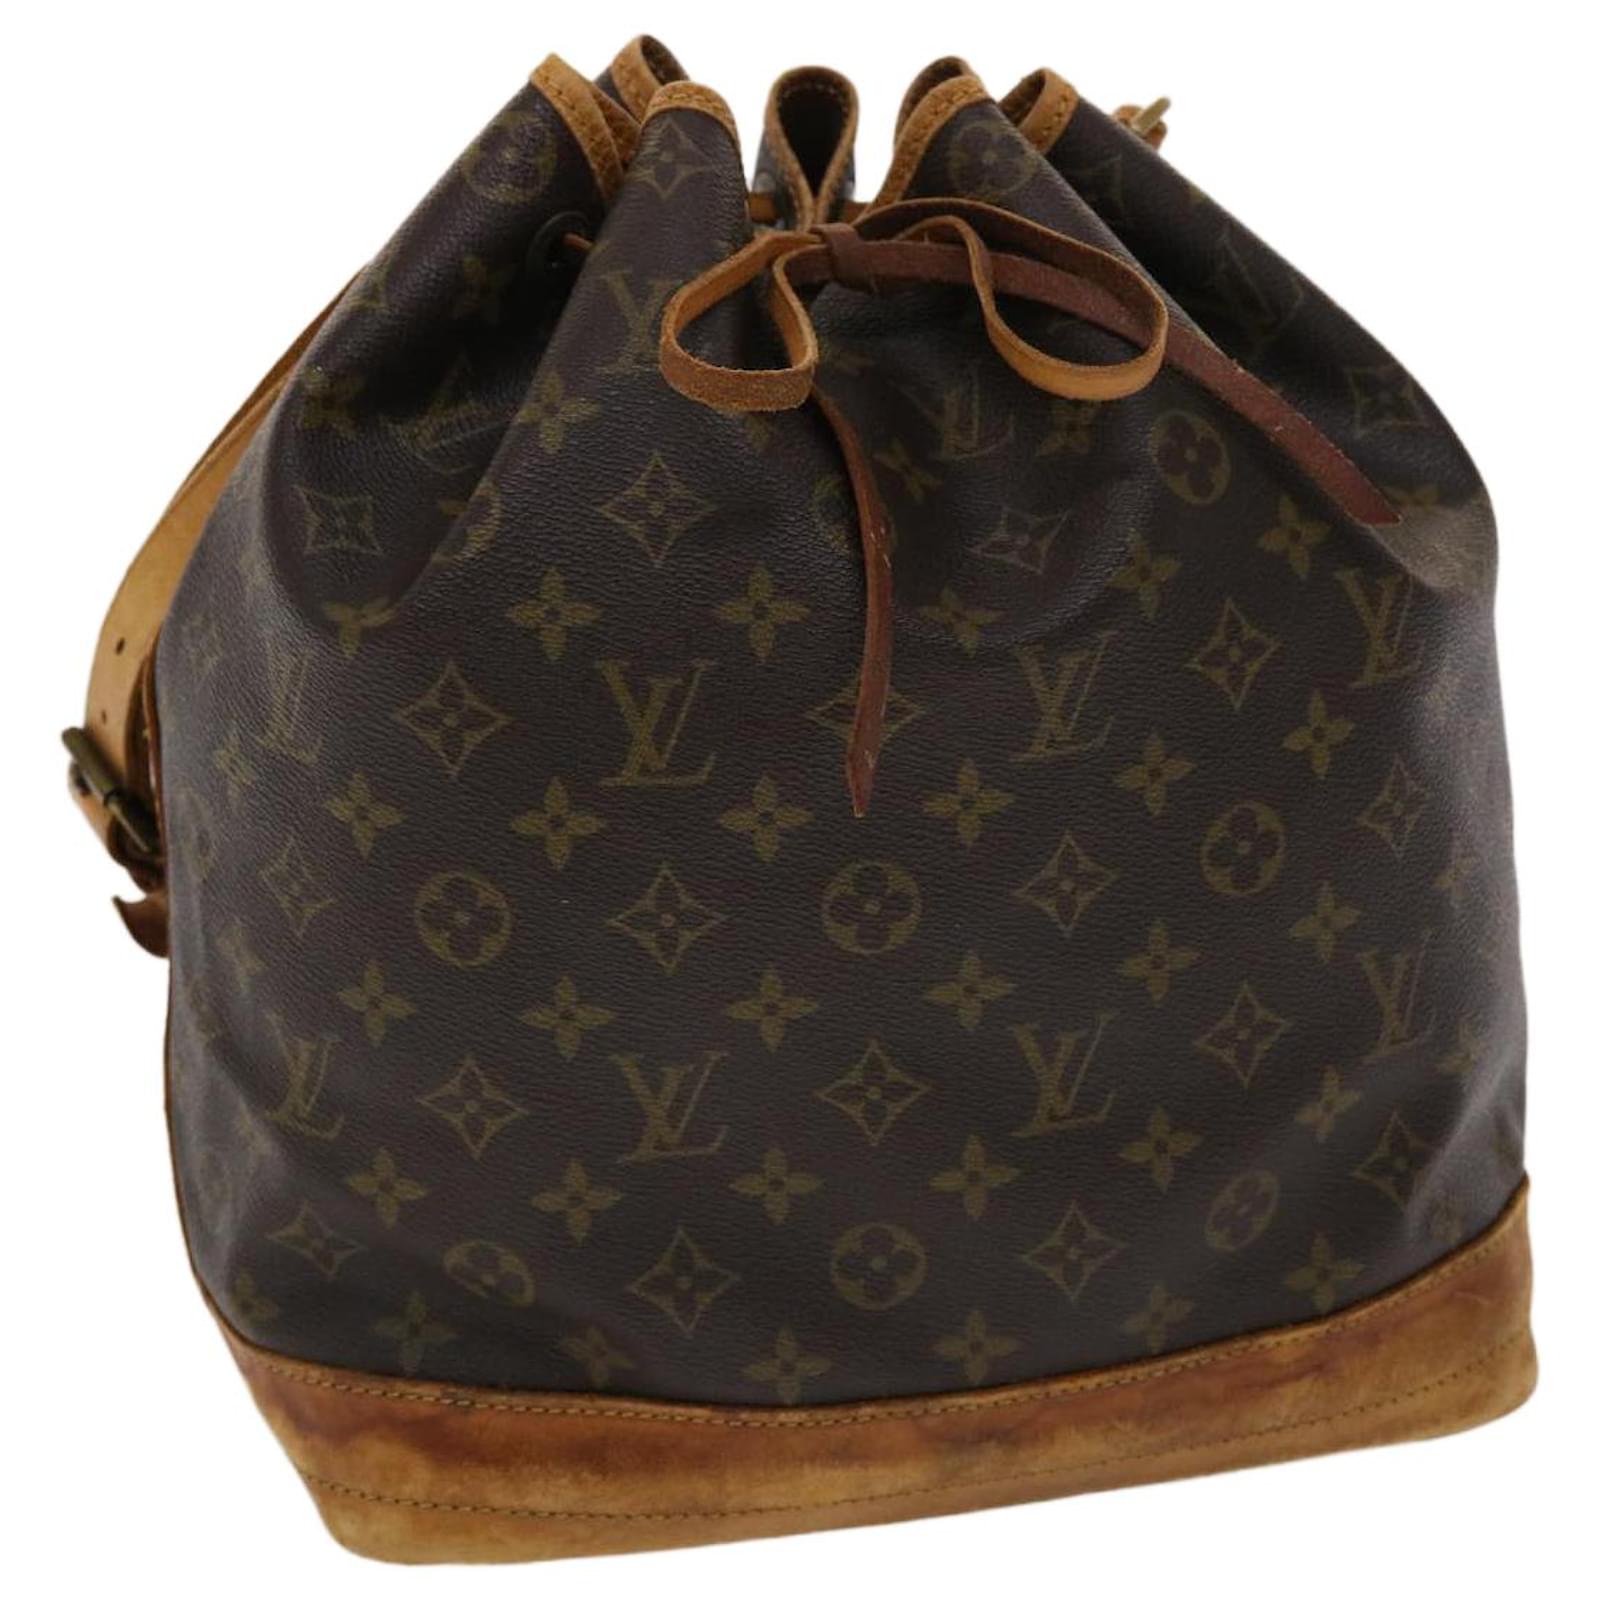 Vintage LV handbag  Lv handbags, Handbag, Louis vuitton bag